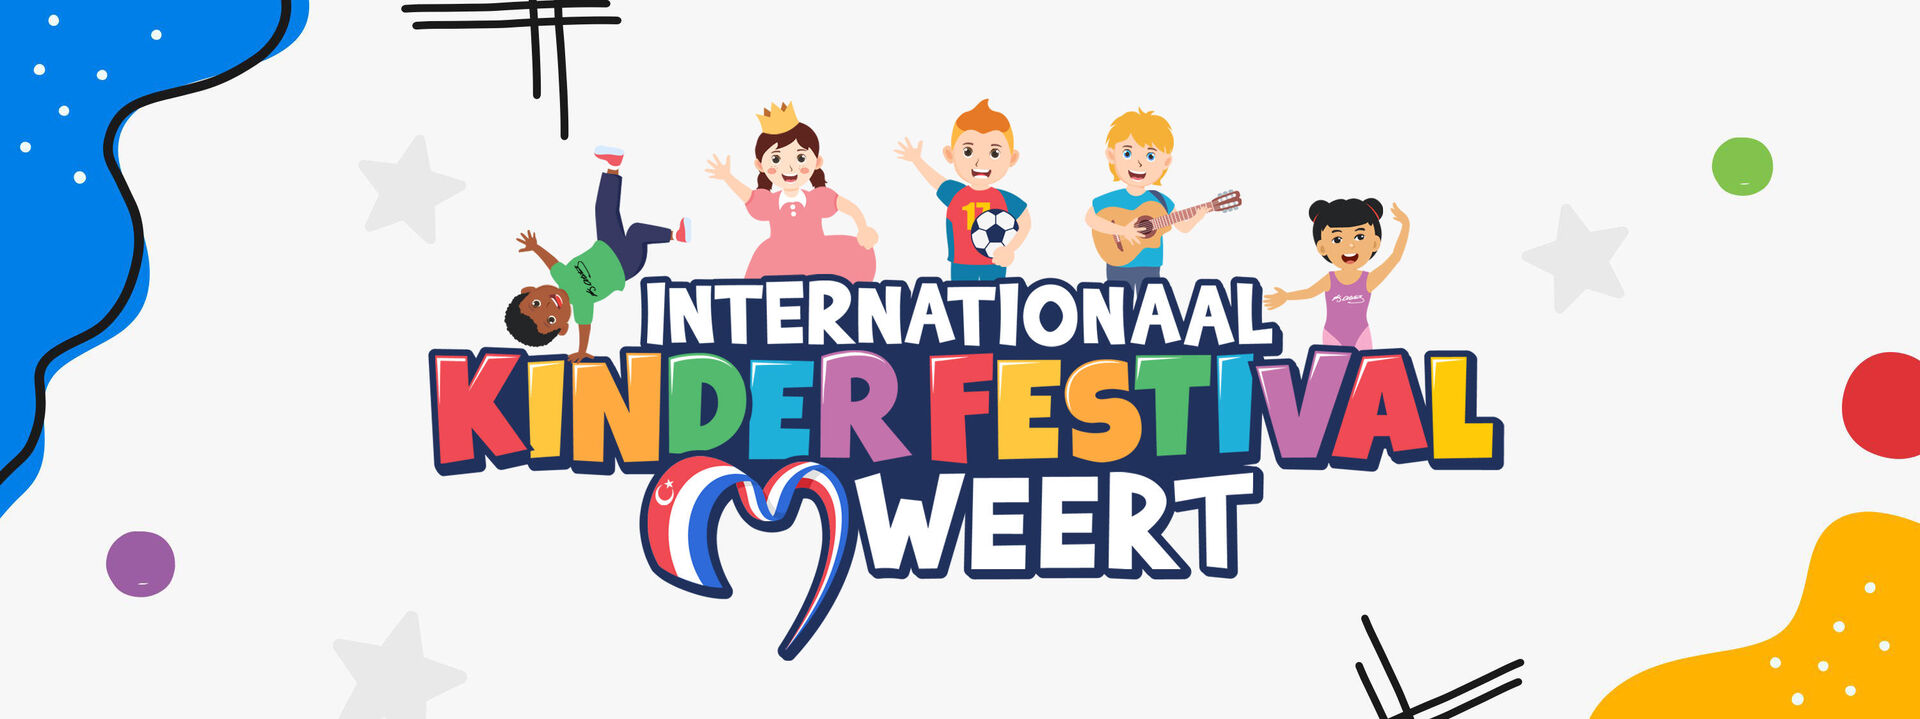 Internationaal Kinderfestival Weert